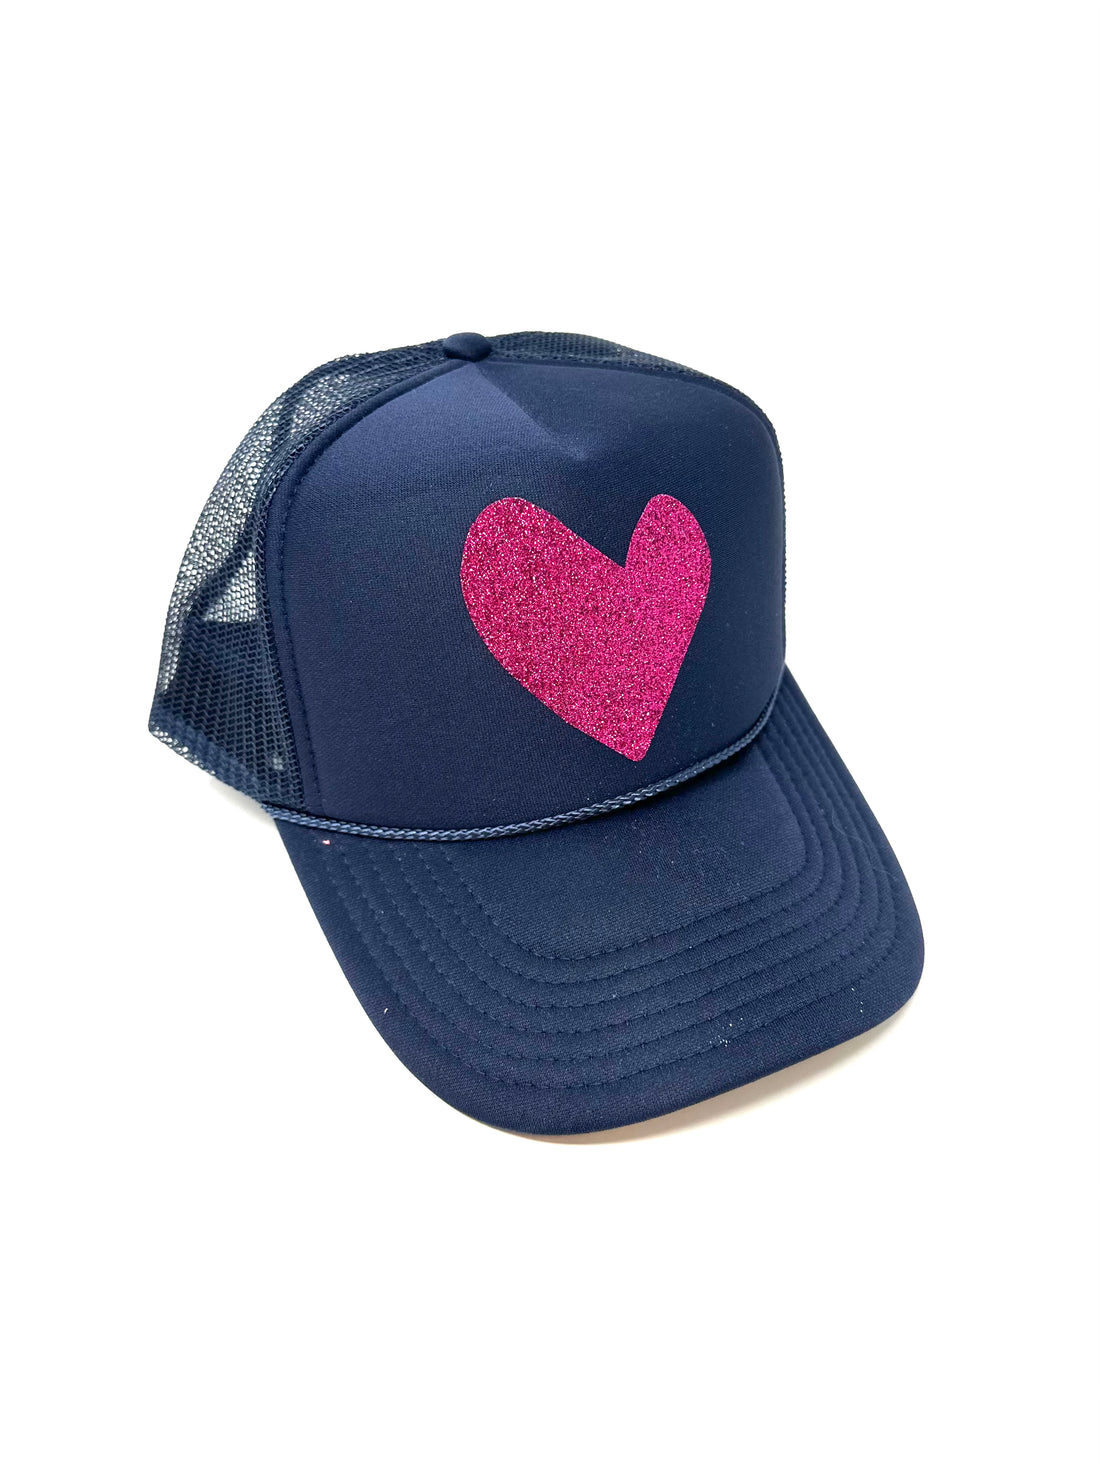 Heart Hat in Navy